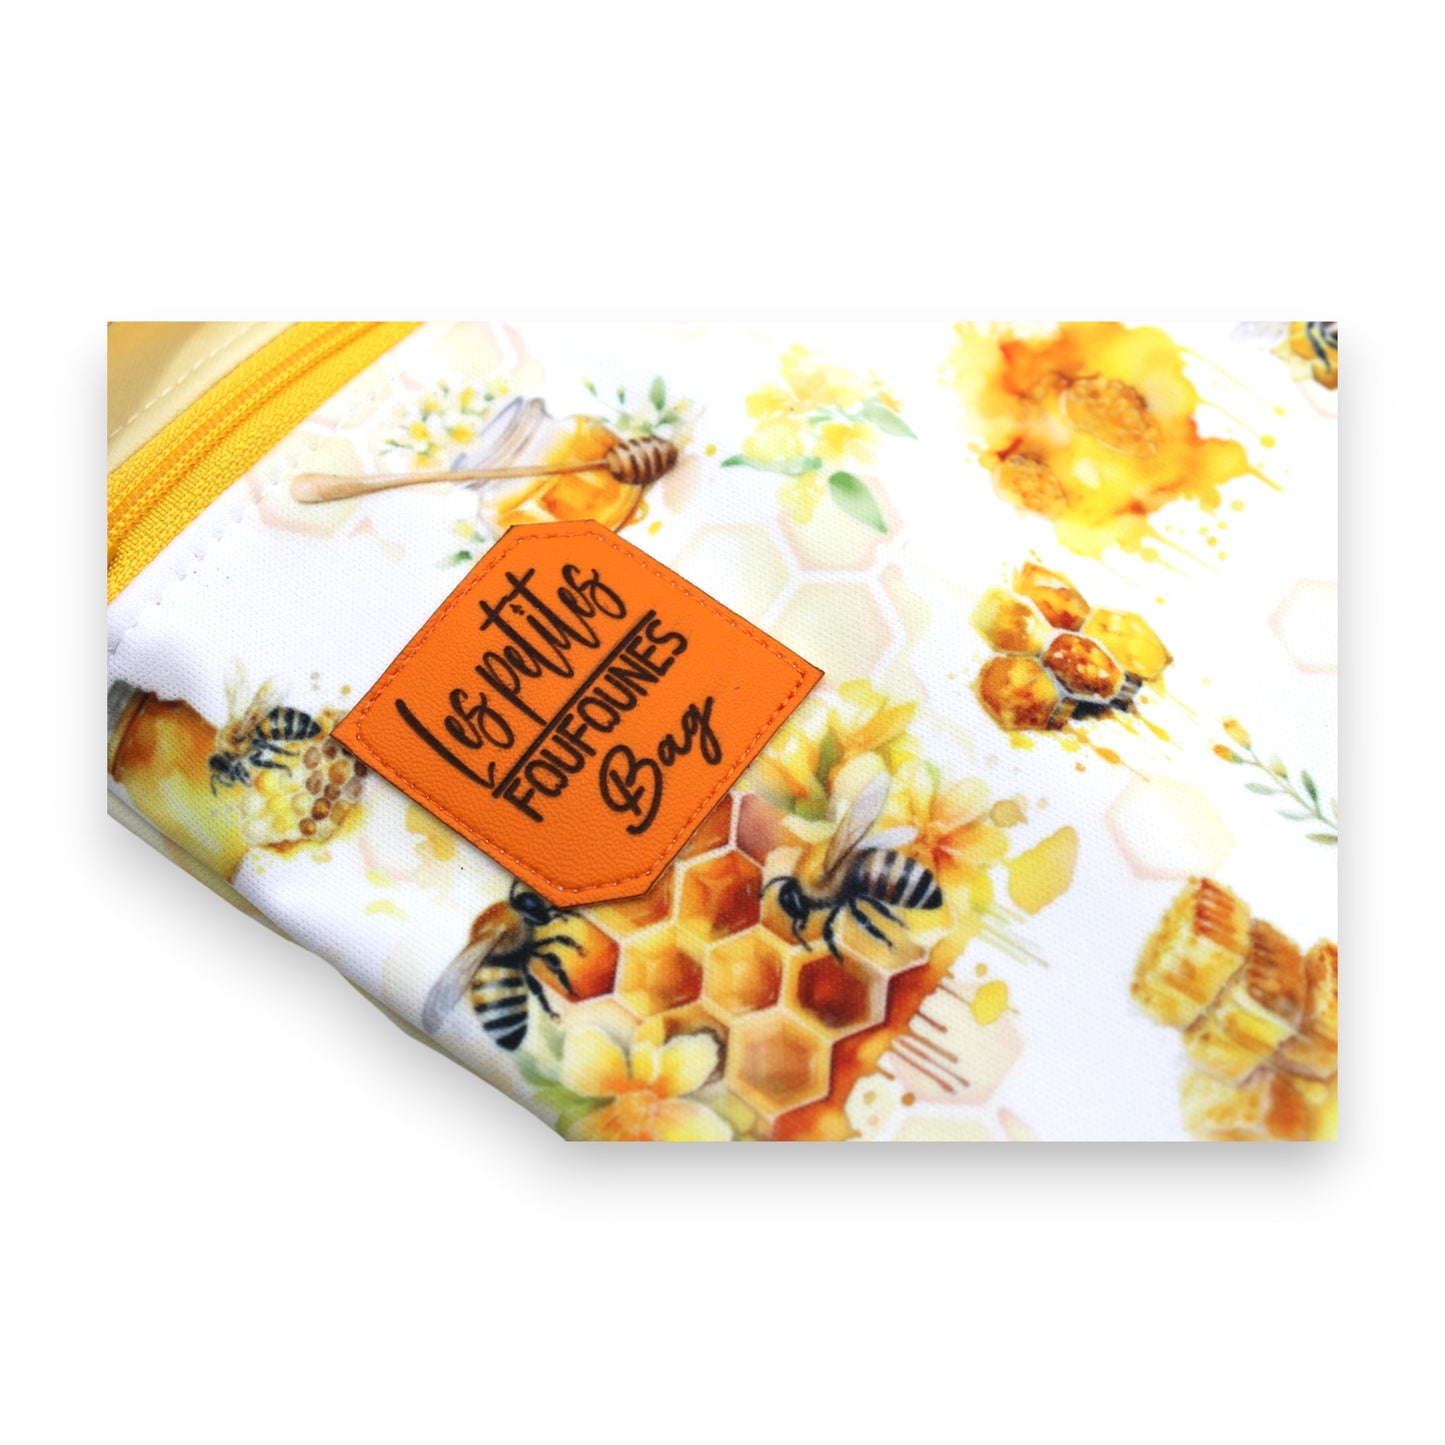 Foufounes Bag - Billie l'abeille (7300836524169)